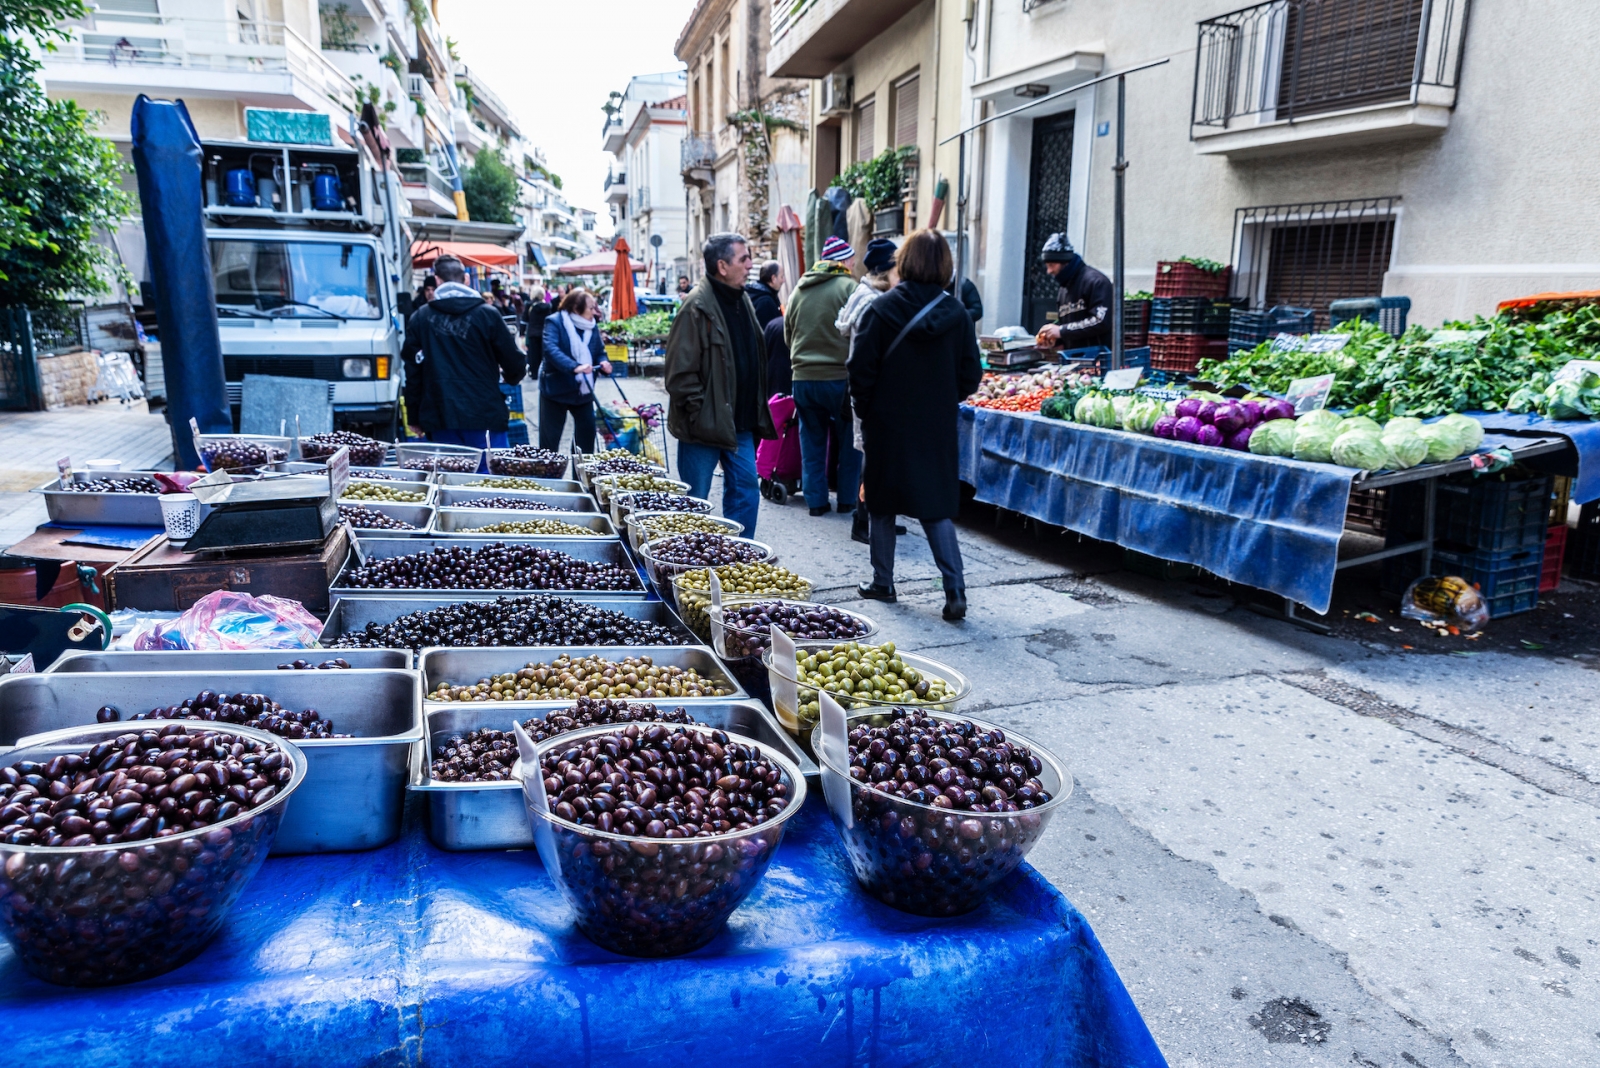 Farmer market on a street in Athens, Greece